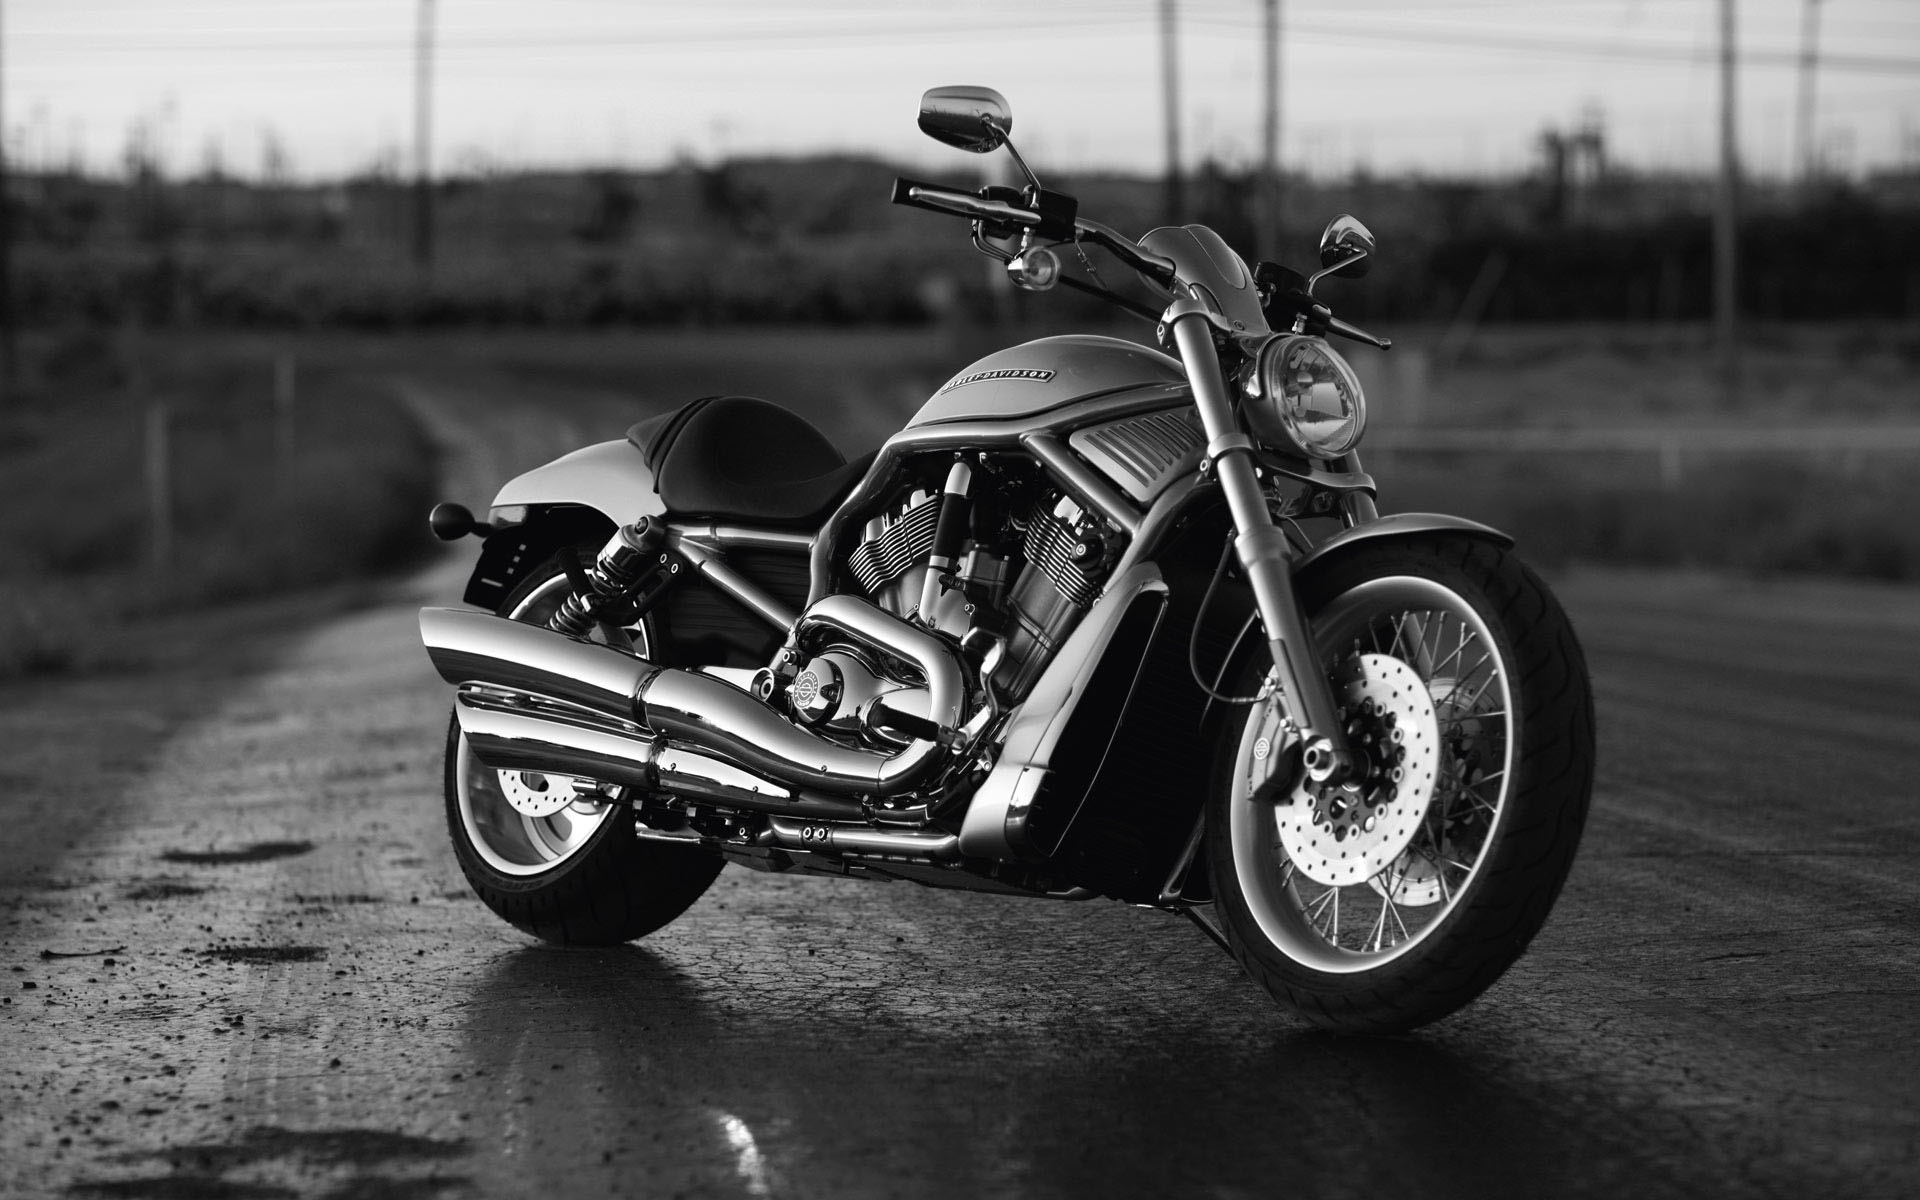 1700 Harley Rider Stock Photos Pictures  RoyaltyFree Images  iStock   Biker Motorcycle Rock man